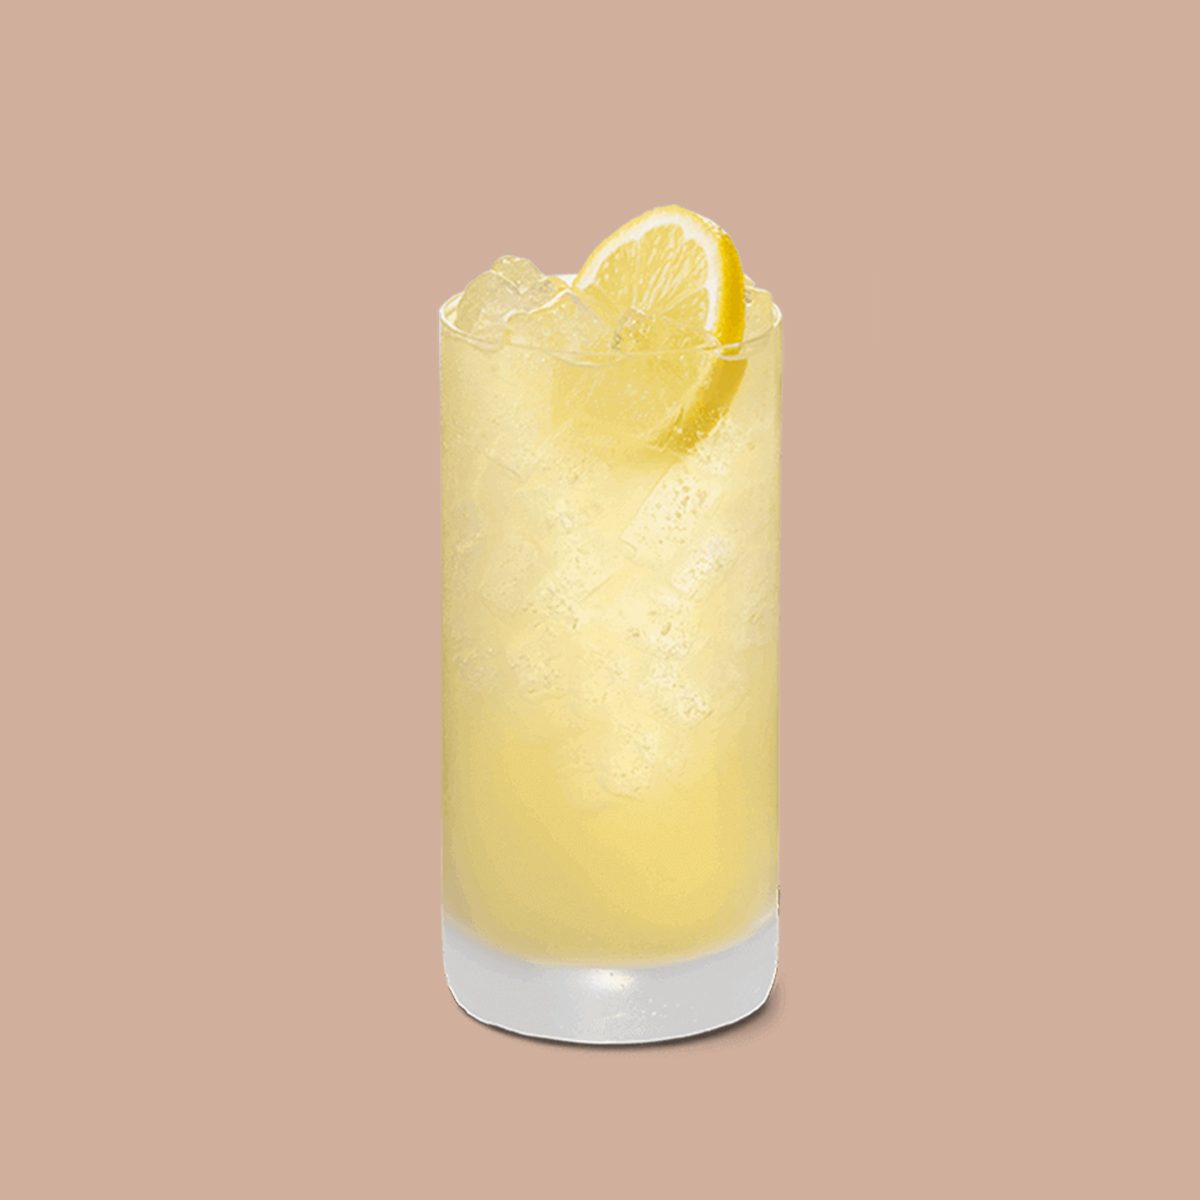 lemonade